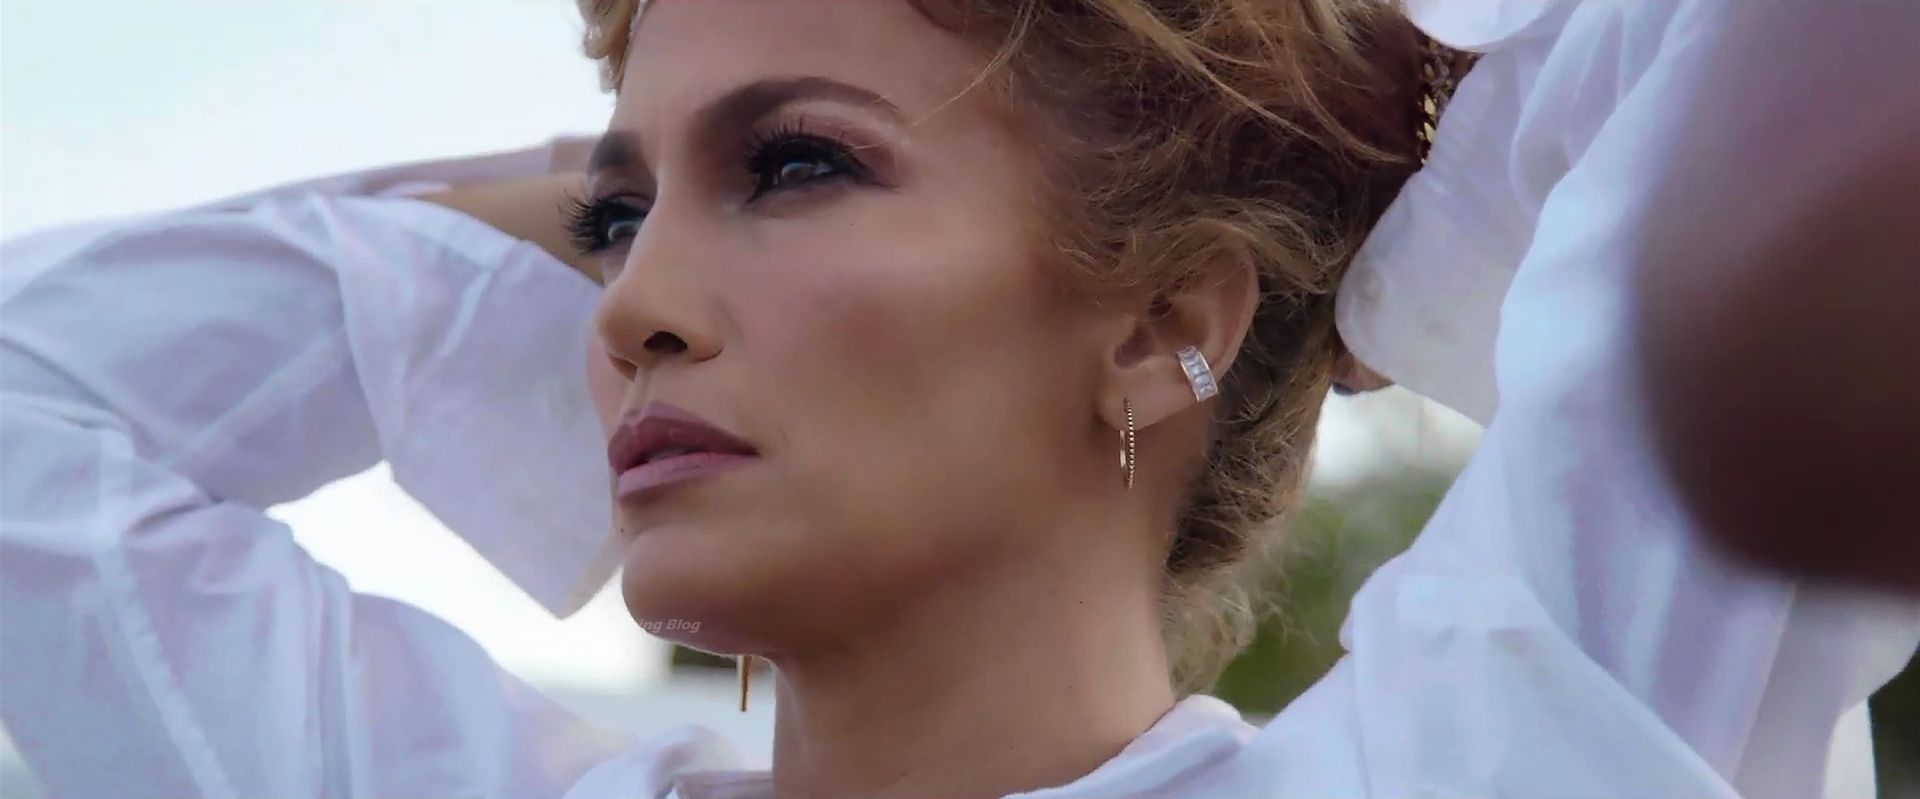 Jennifer-Lopez-Sexy-The-Fappening-Blog-18-1.jpg